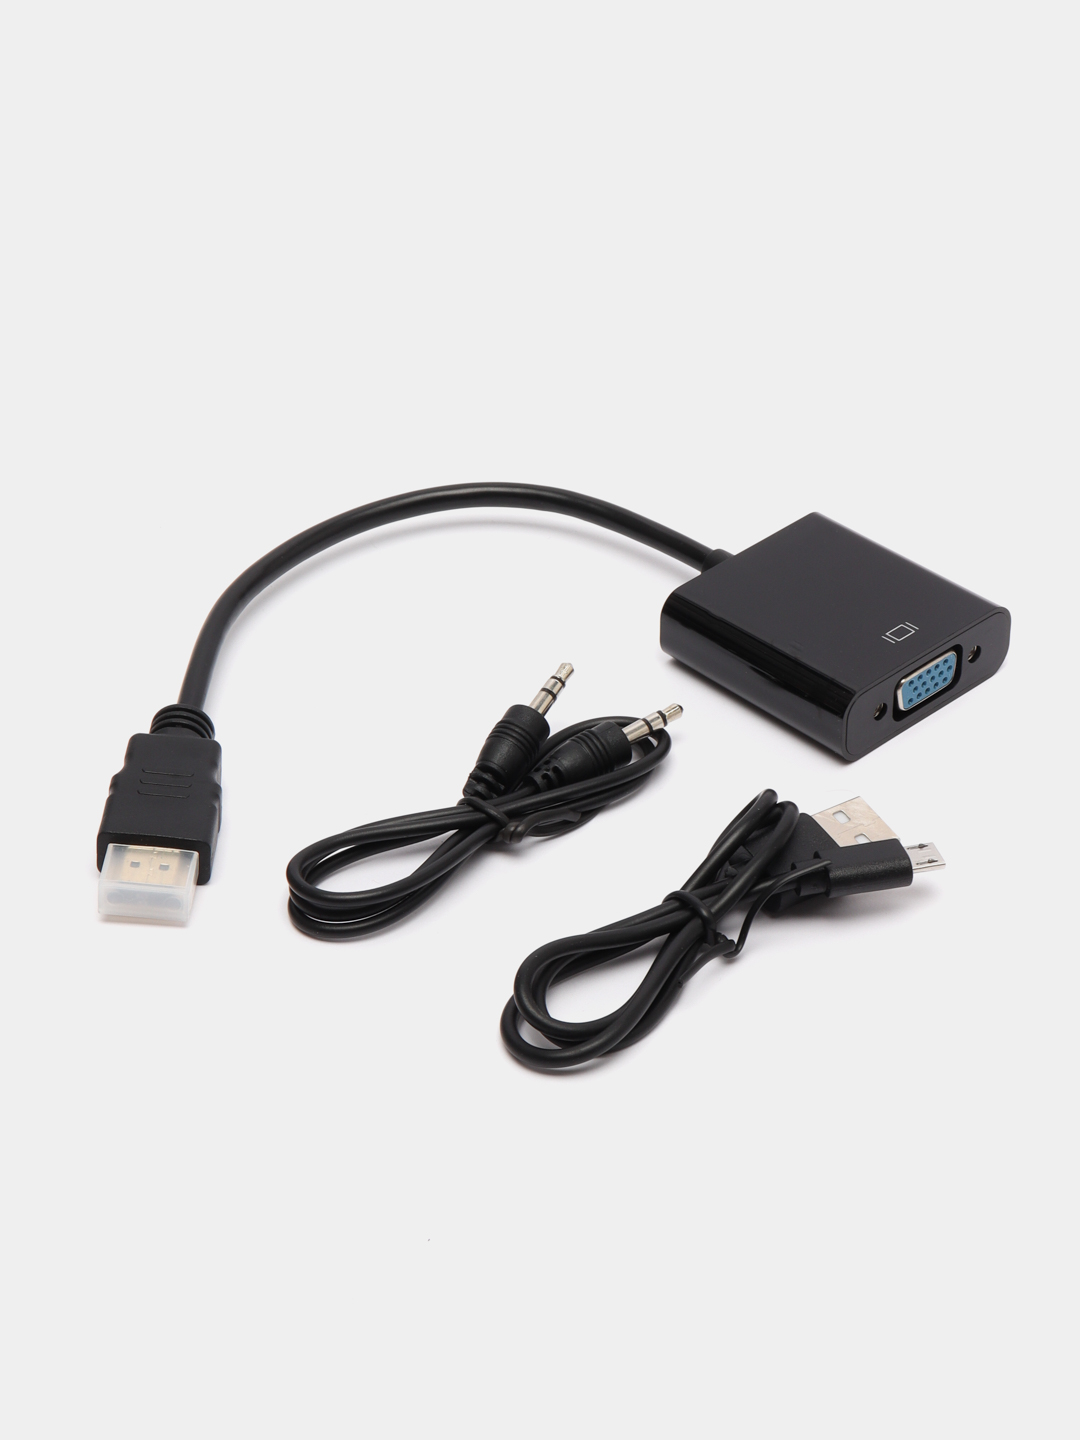  адаптер HDMI to VGA+AUX с питанием Micro USB за 350 ₽  .